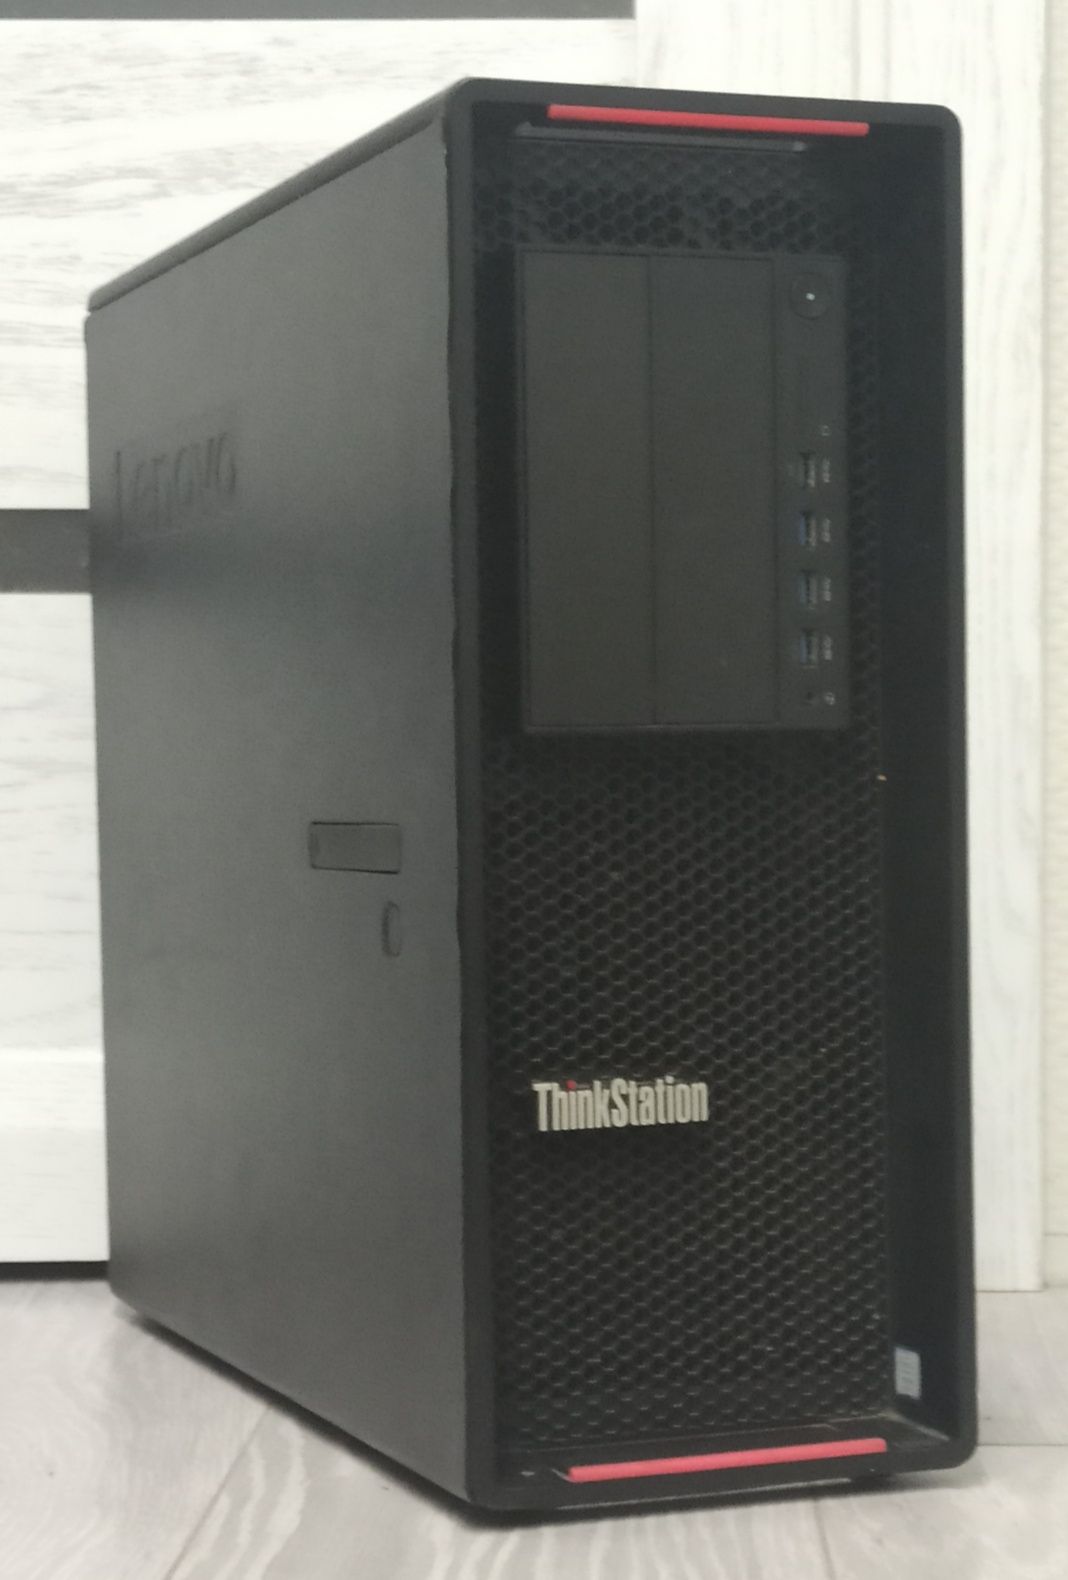 Lenovo Thinkstation P510 E5-1620 v4, 32GB, 500 HDD, Nvidia K620